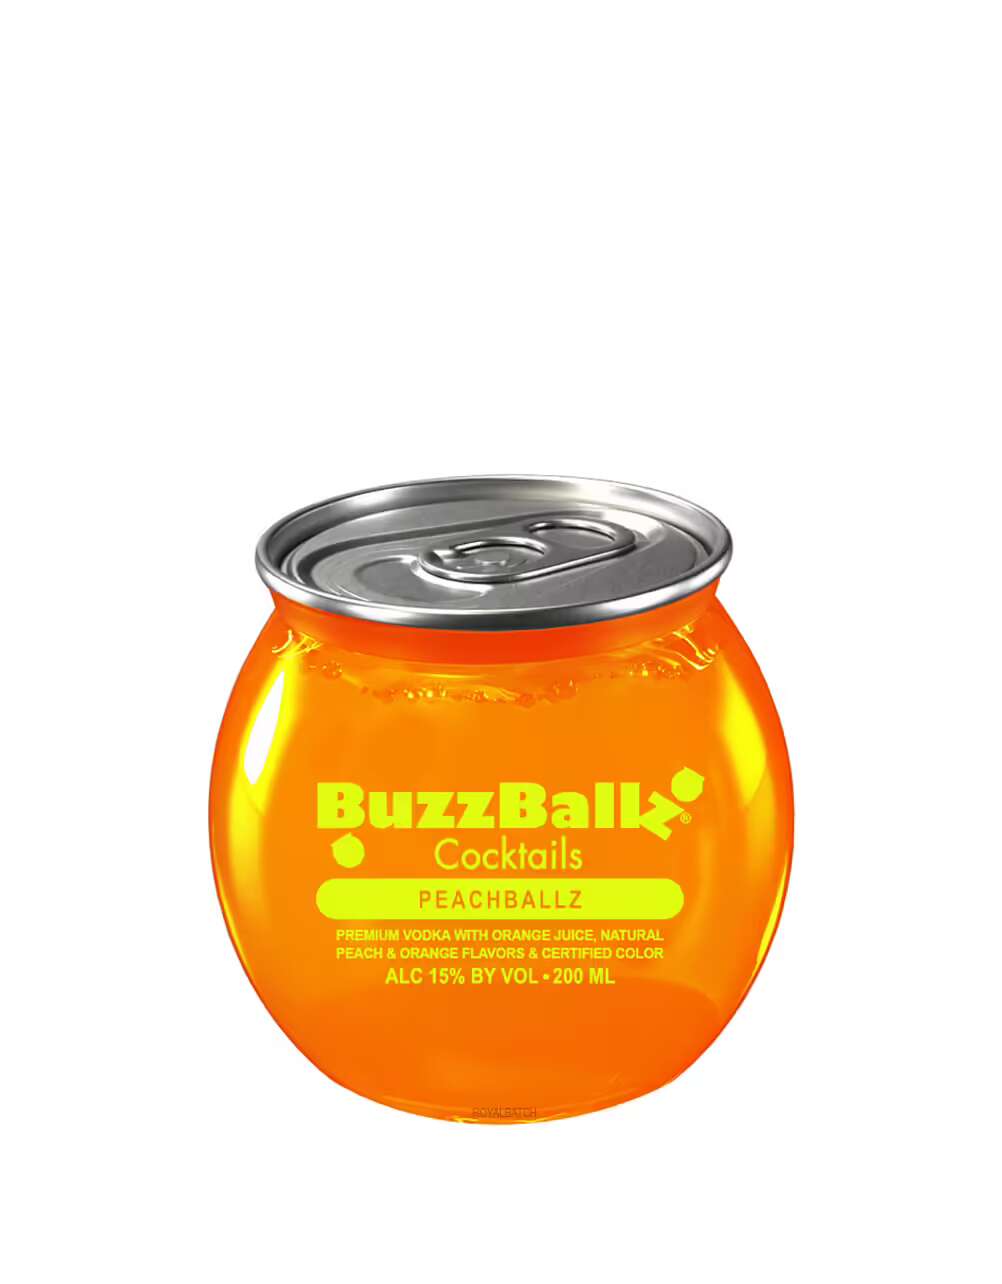 BuzzBallz Cocktails Peachballz 200ml